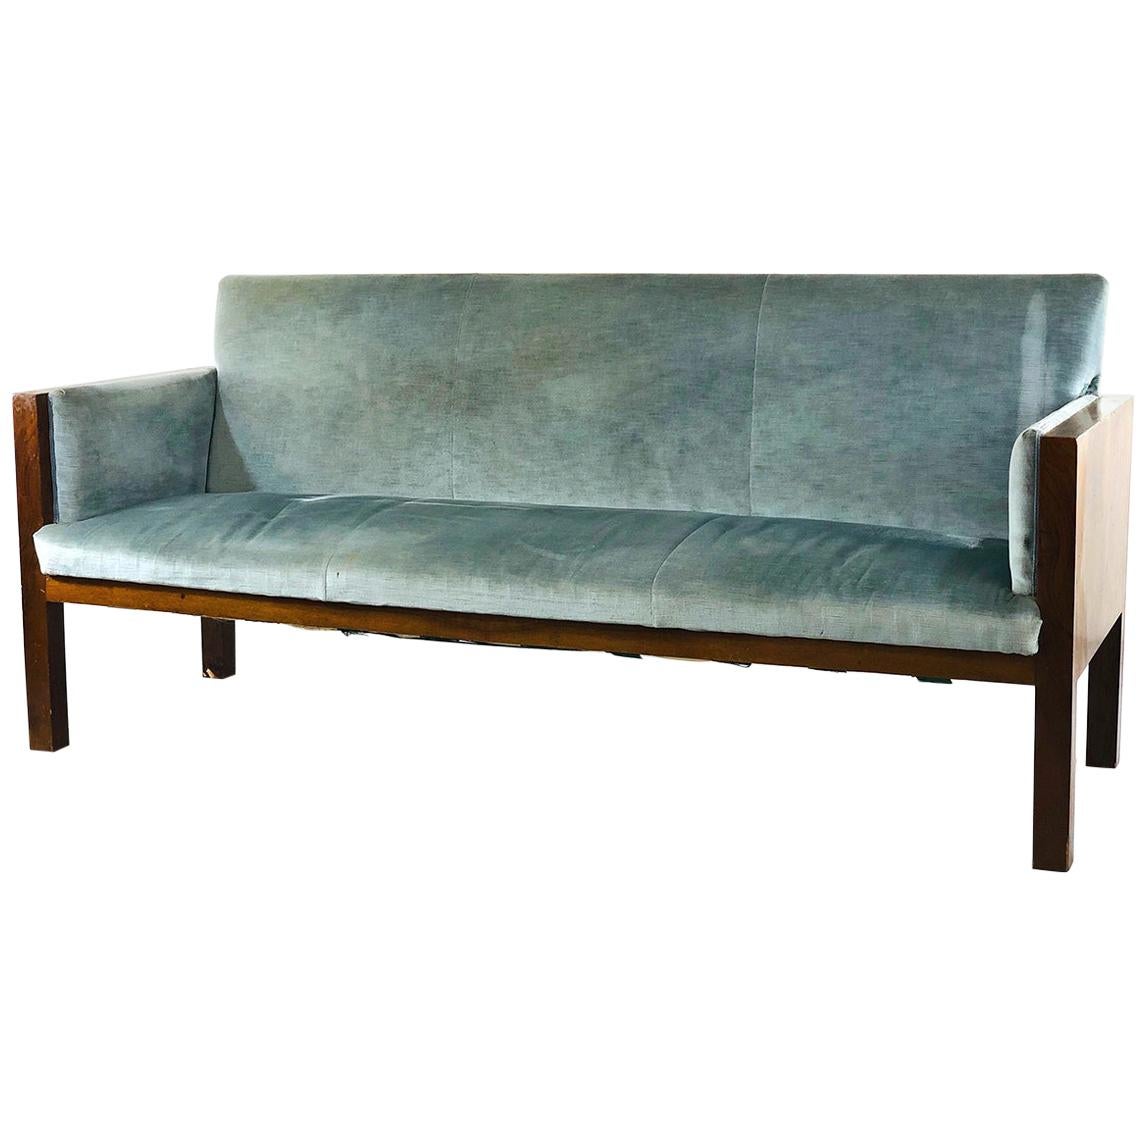 Dreisitziges Sofa, Franco Albini zugeschrieben, 1940er Jahre